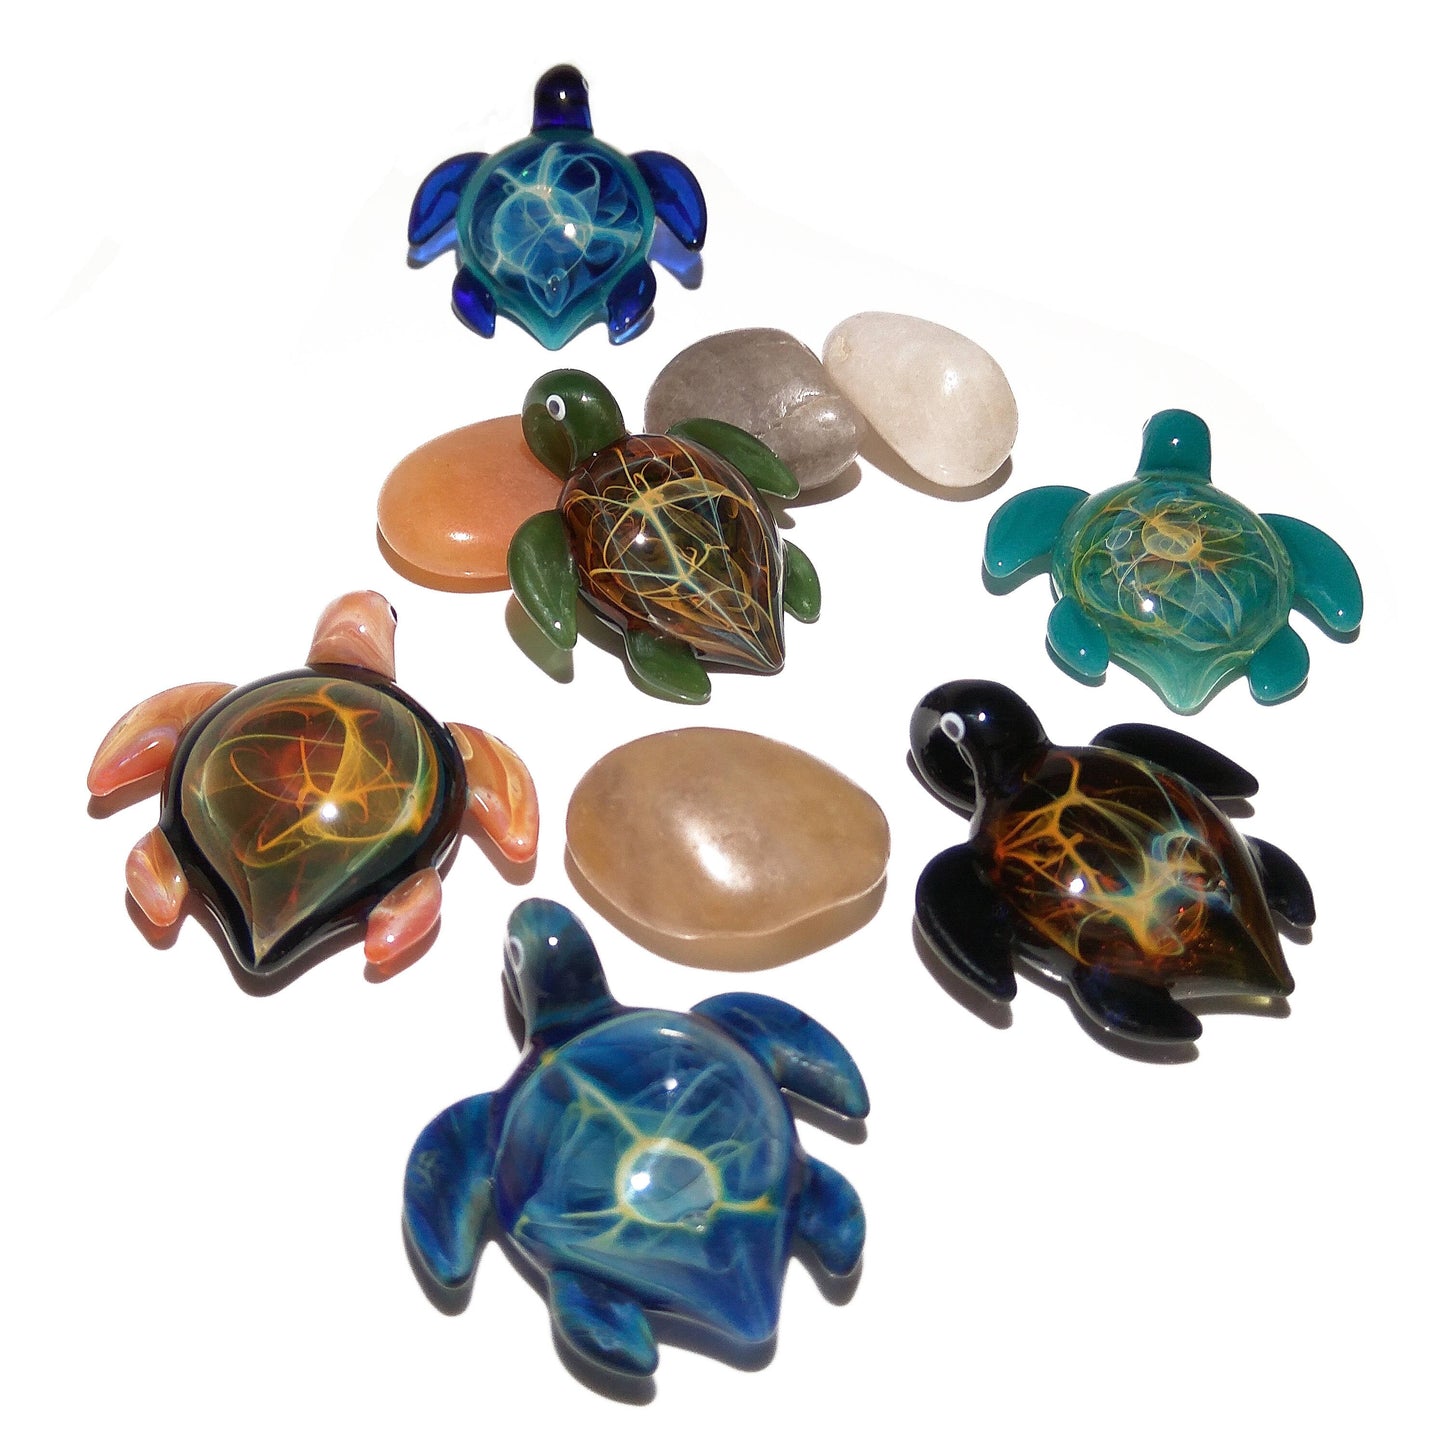 Glass Jewelry - Mystical Jem Mini Turtle Pendant - Glass Art - Blown Glass - Handmade - Unique Jewelry - Boro Pendant - Universe Filament